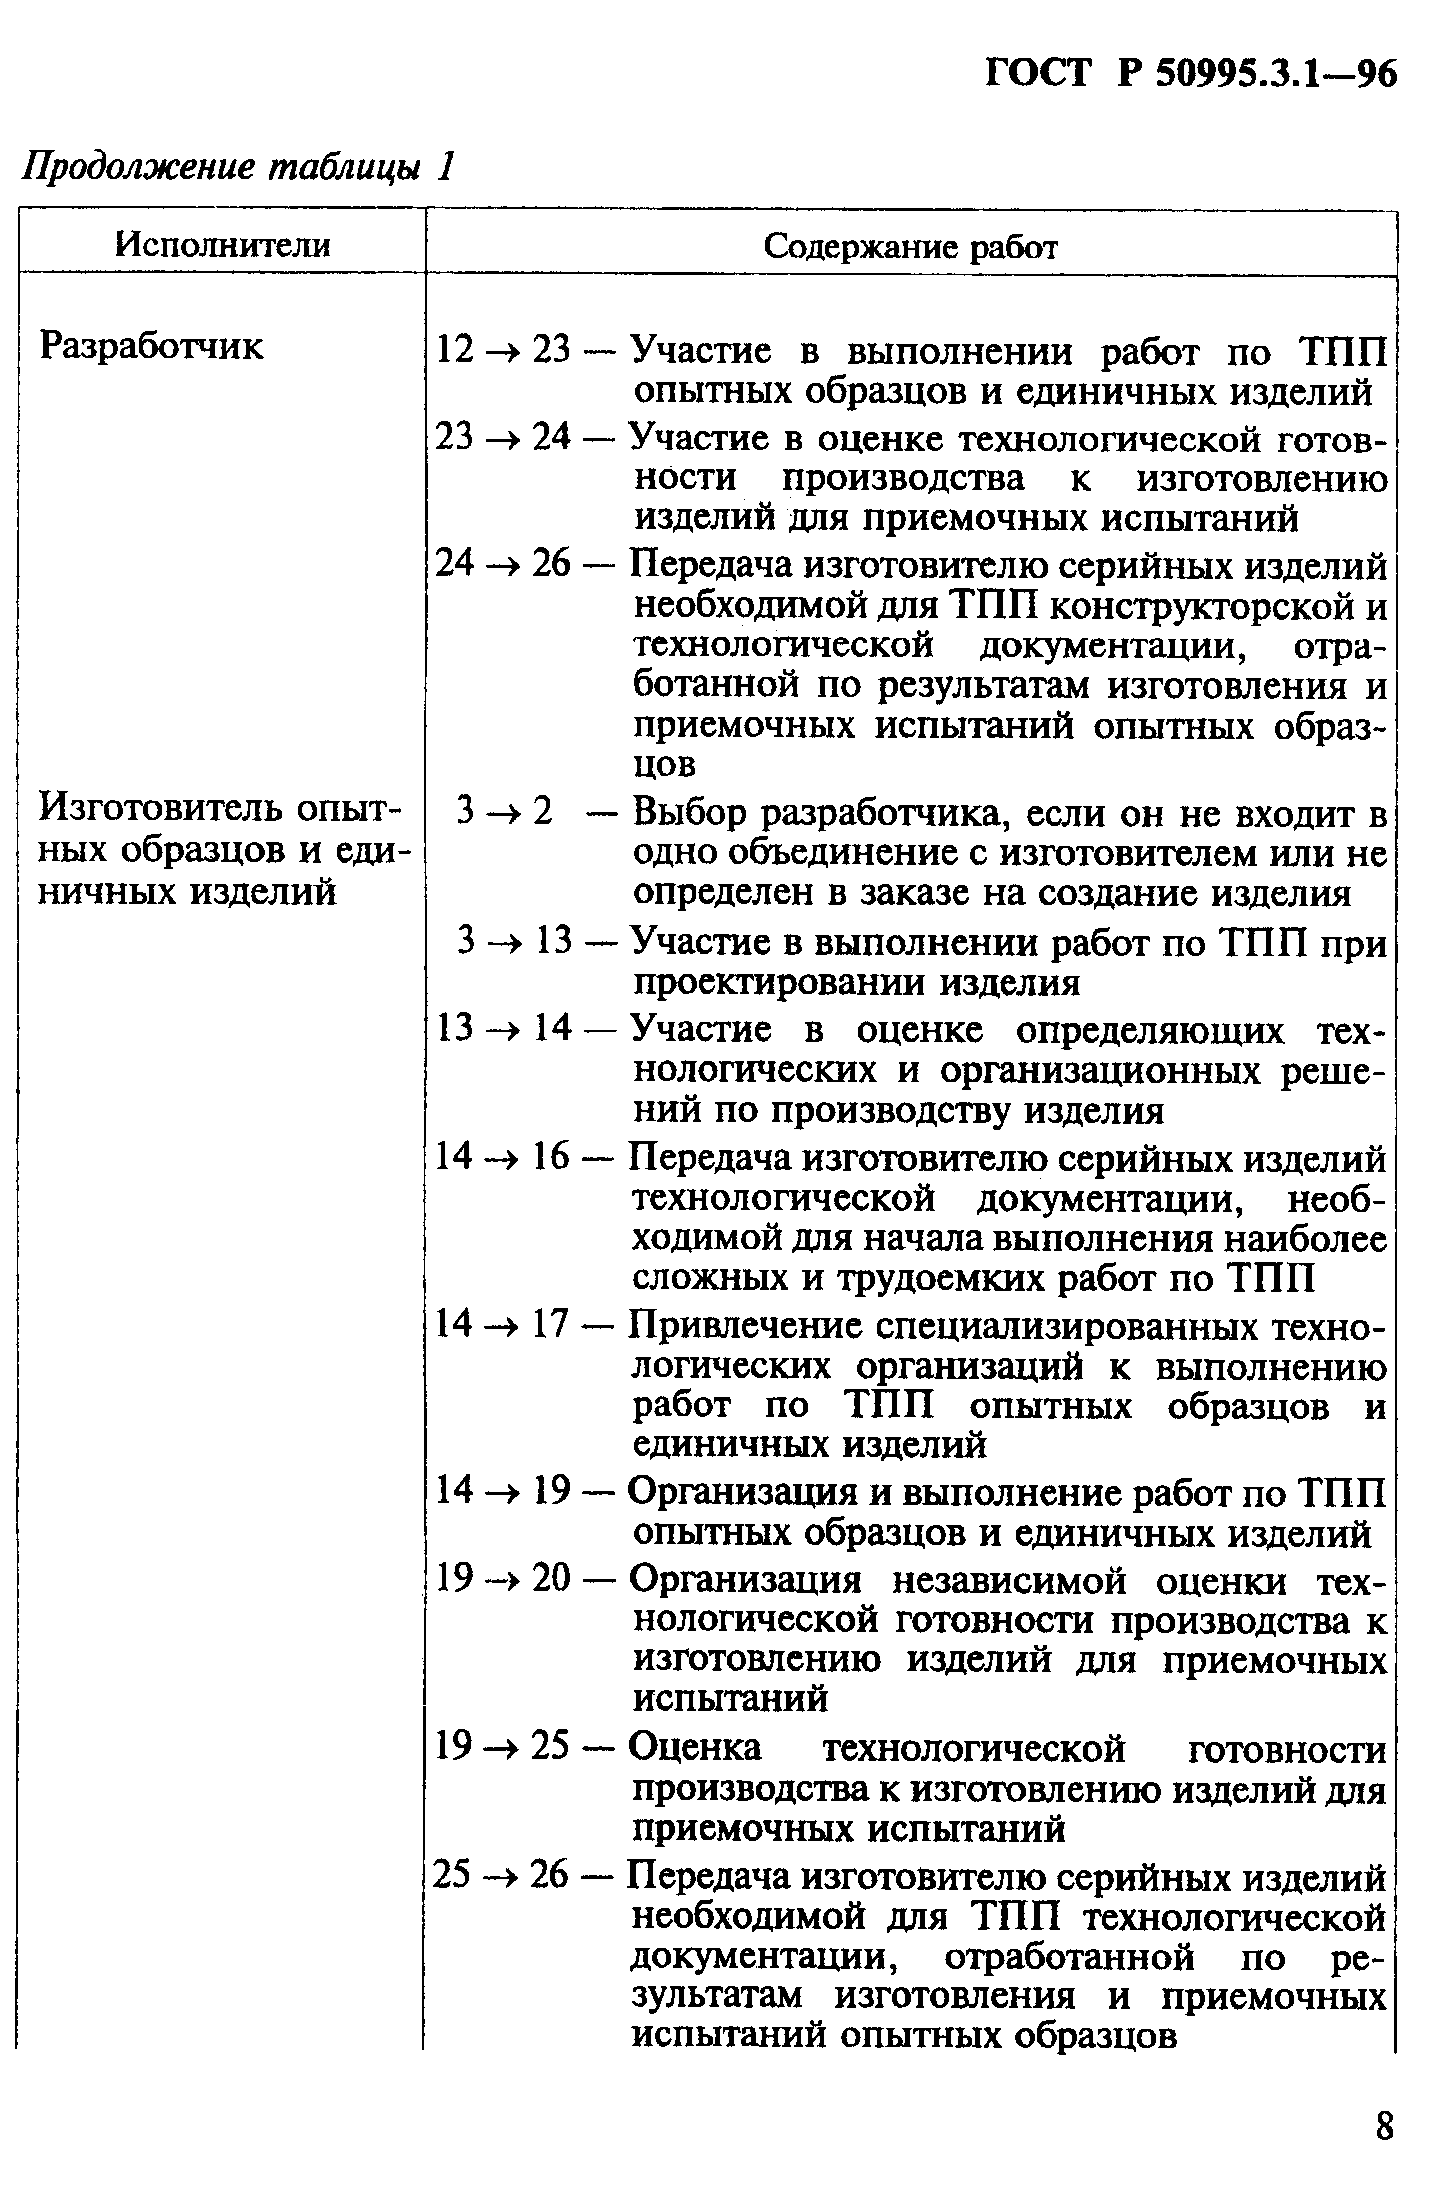 ГОСТ Р 50995.3.1-96